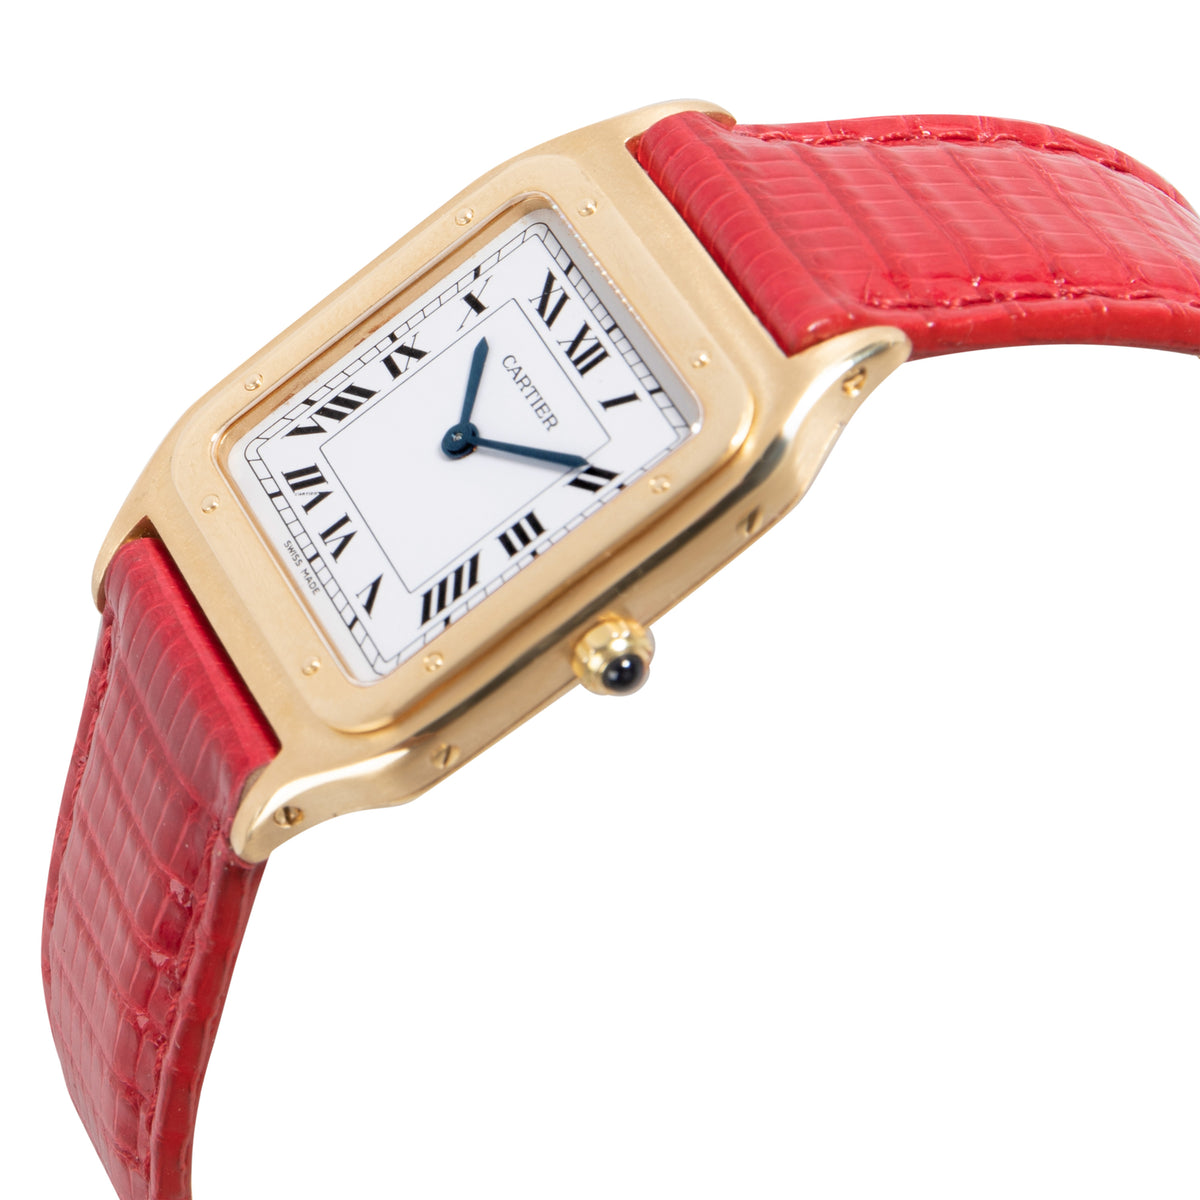 Cartier Santos 9605 Women's Watch in 18kt Yellow Gold